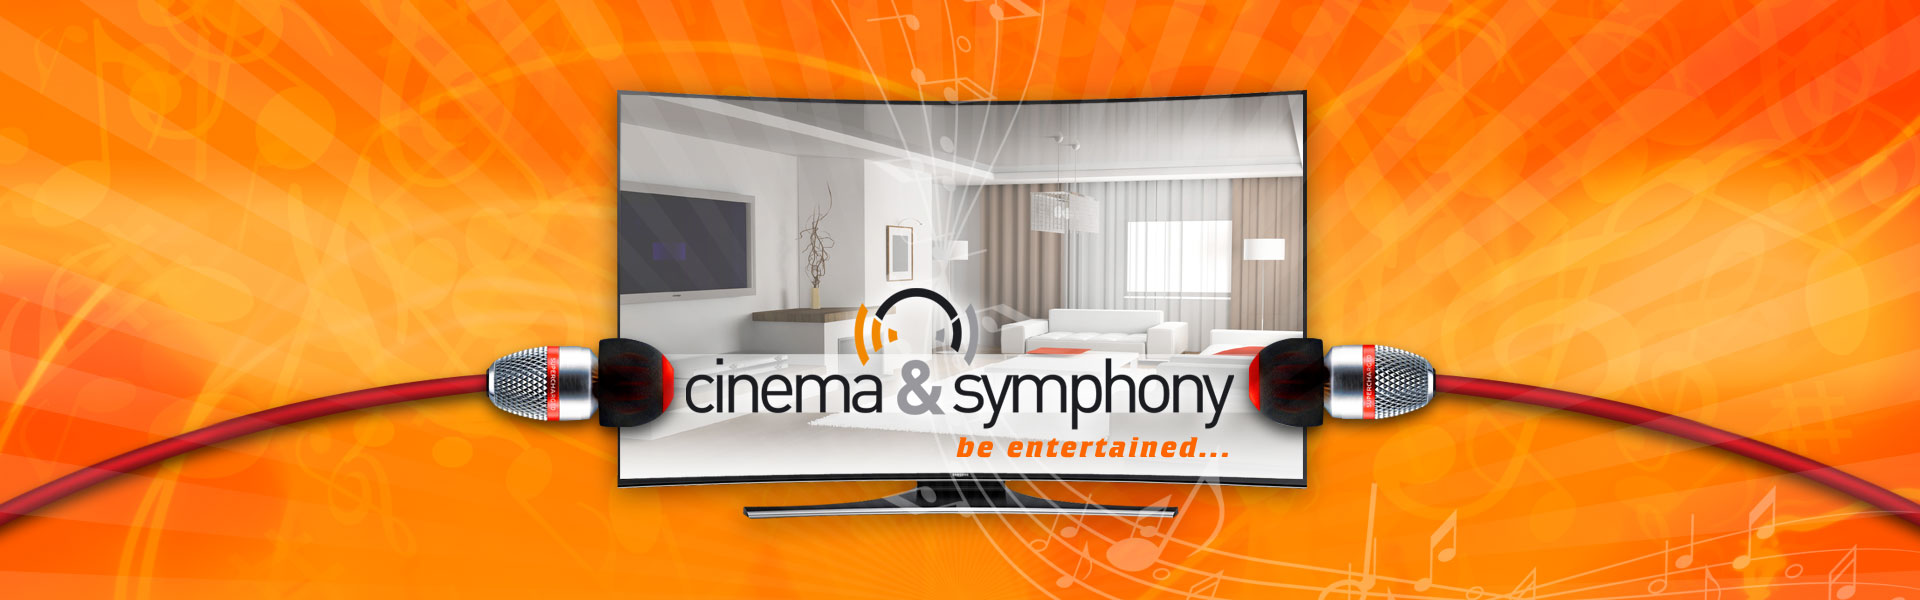 Cinema Symphony Slider